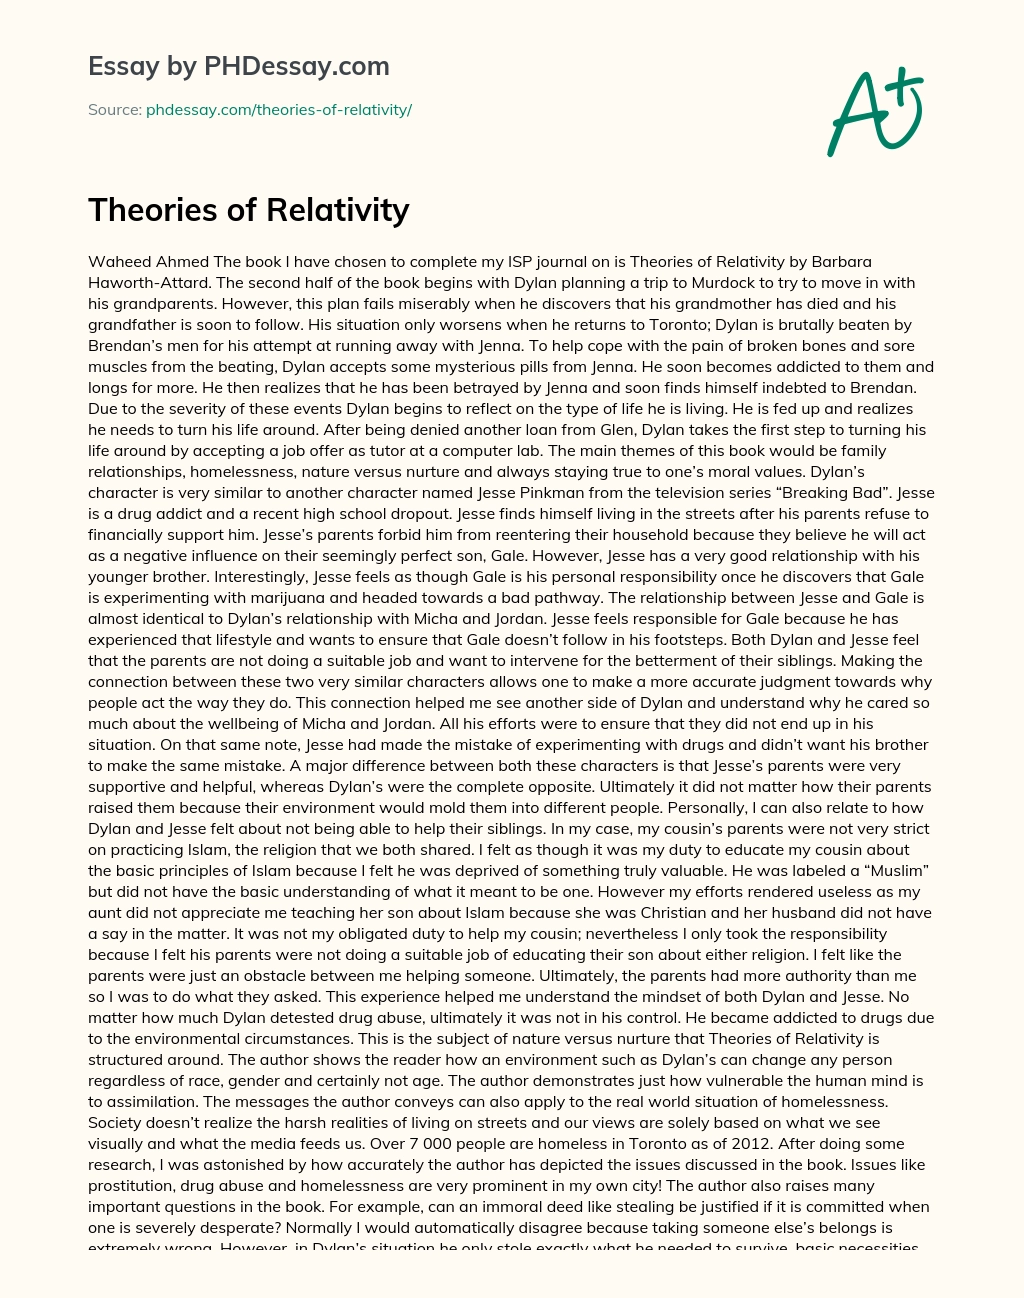 Theories of Relativity essay